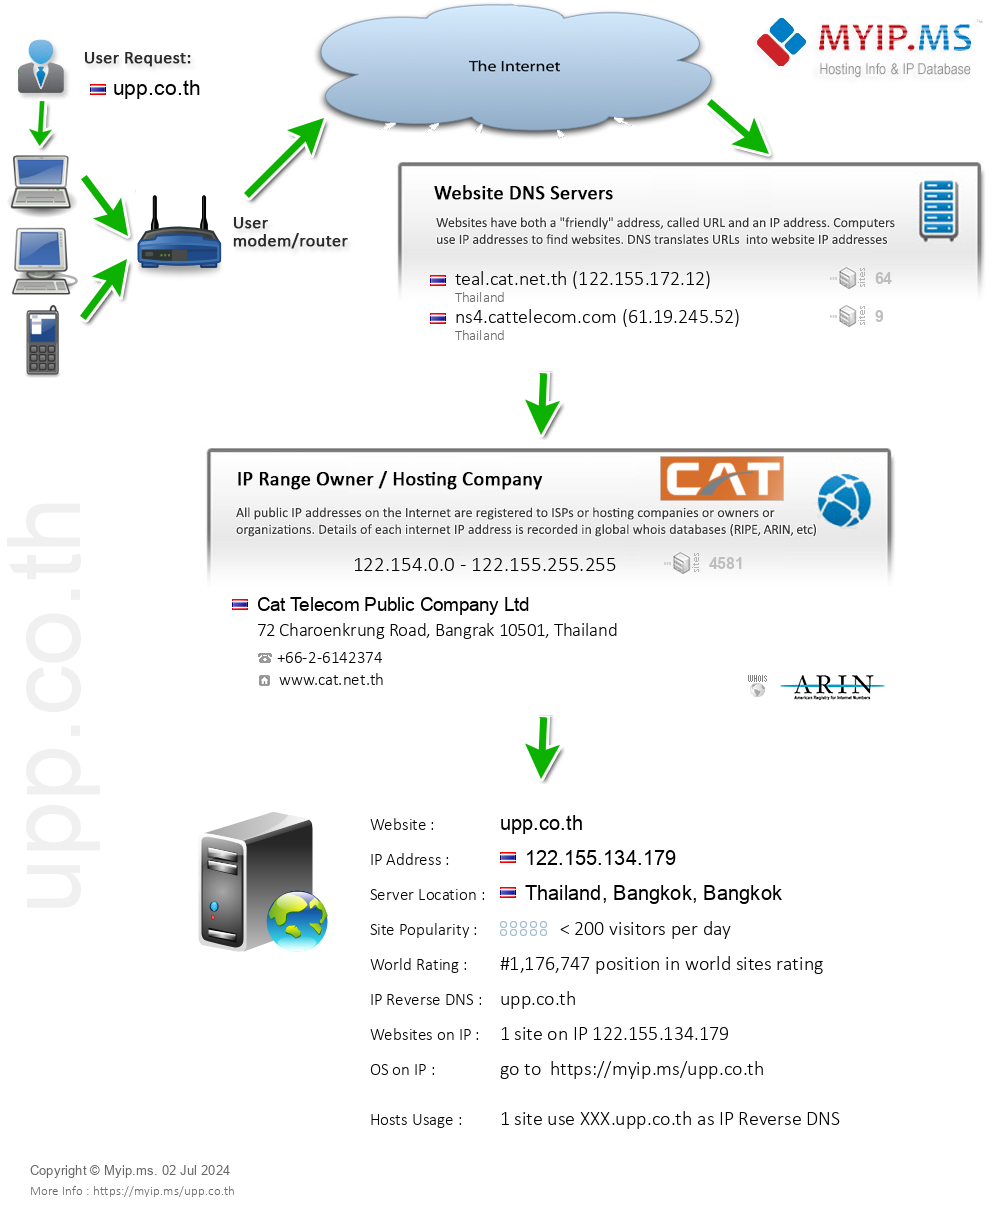 Upp.co.th - Website Hosting Visual IP Diagram